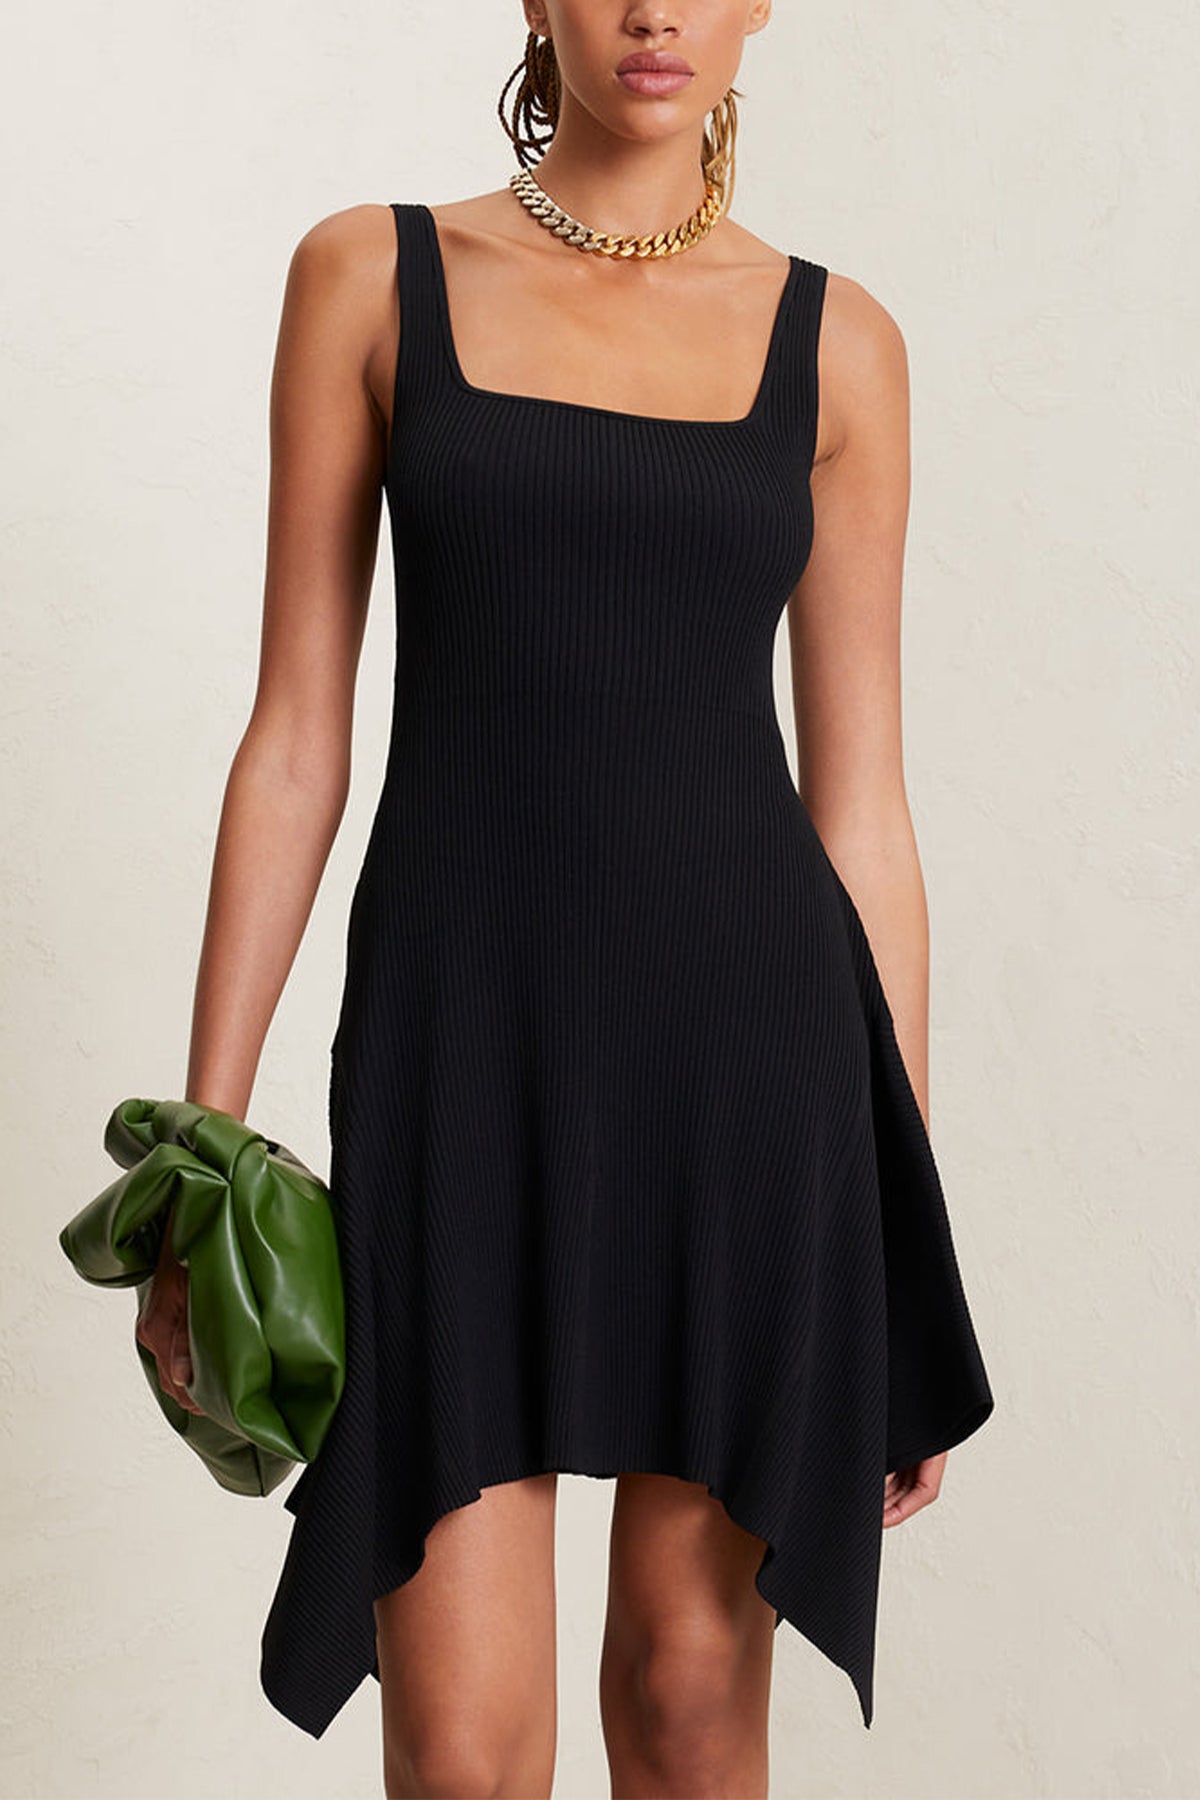 Dalia Dress in Black - shop-olivia.com